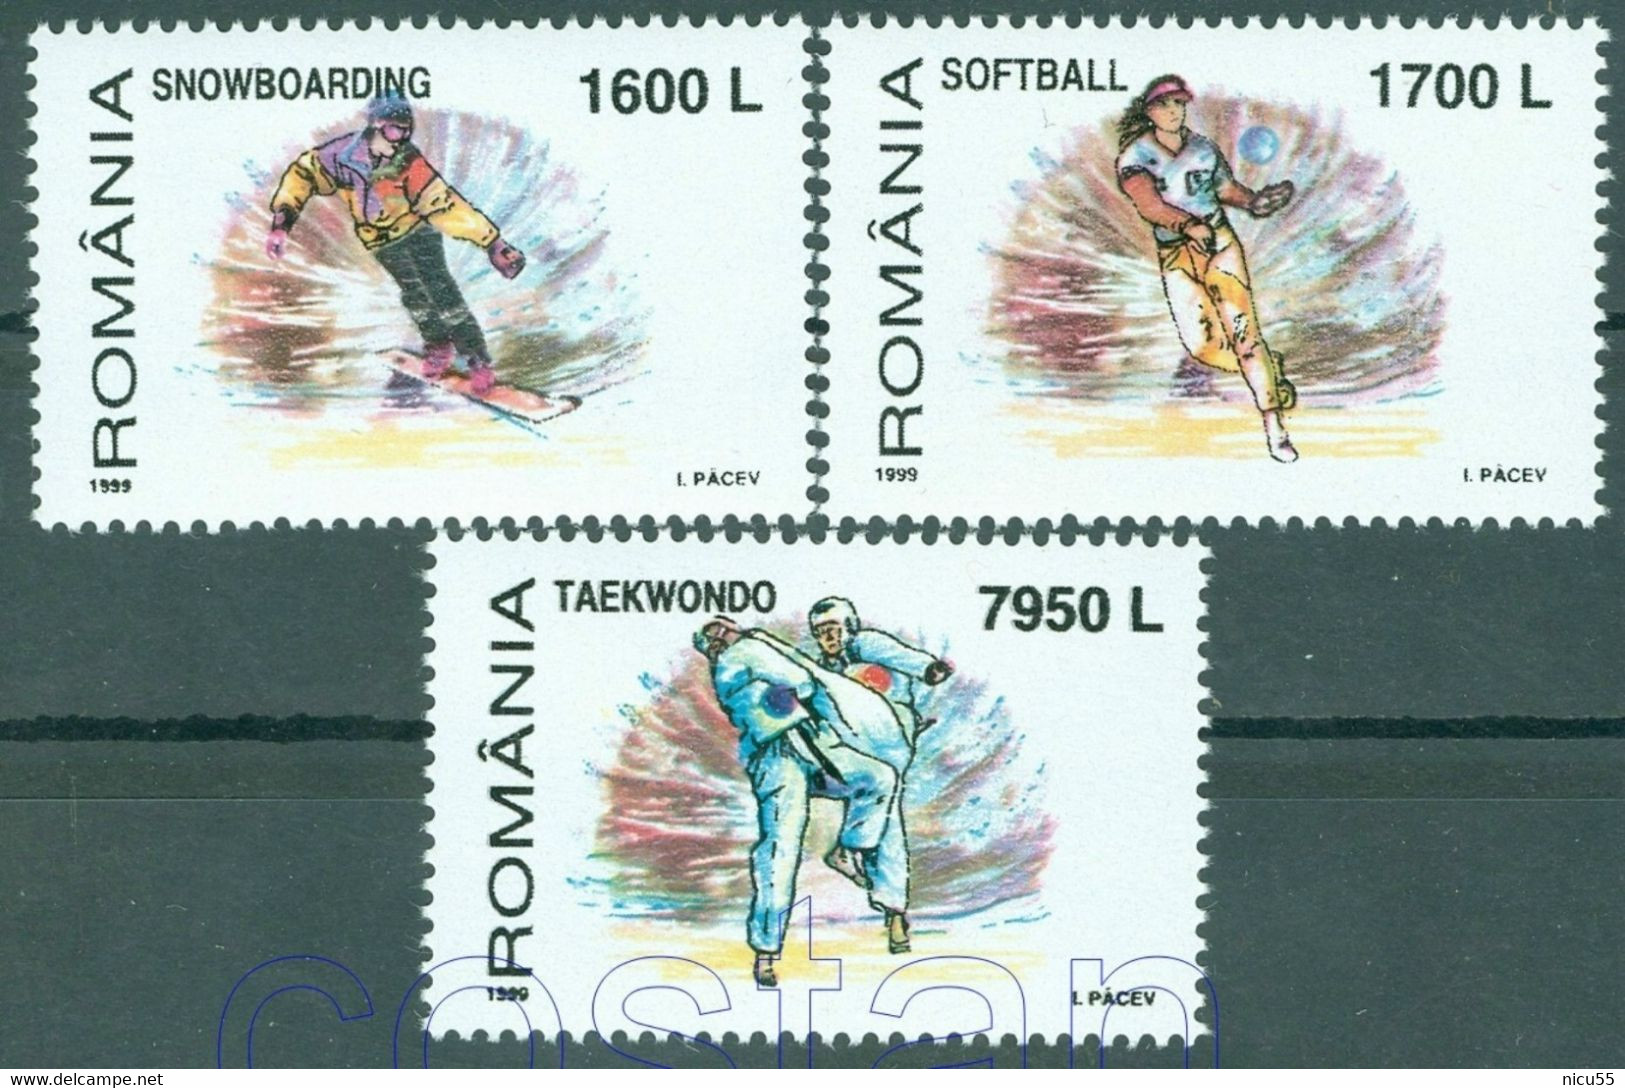 1999 Taekwondo/Tae Kwon Do,Softball,Snowboarding,New Olympic SPORTS,Romania,Mi.5441/Y.4568,MNH - Ohne Zuordnung